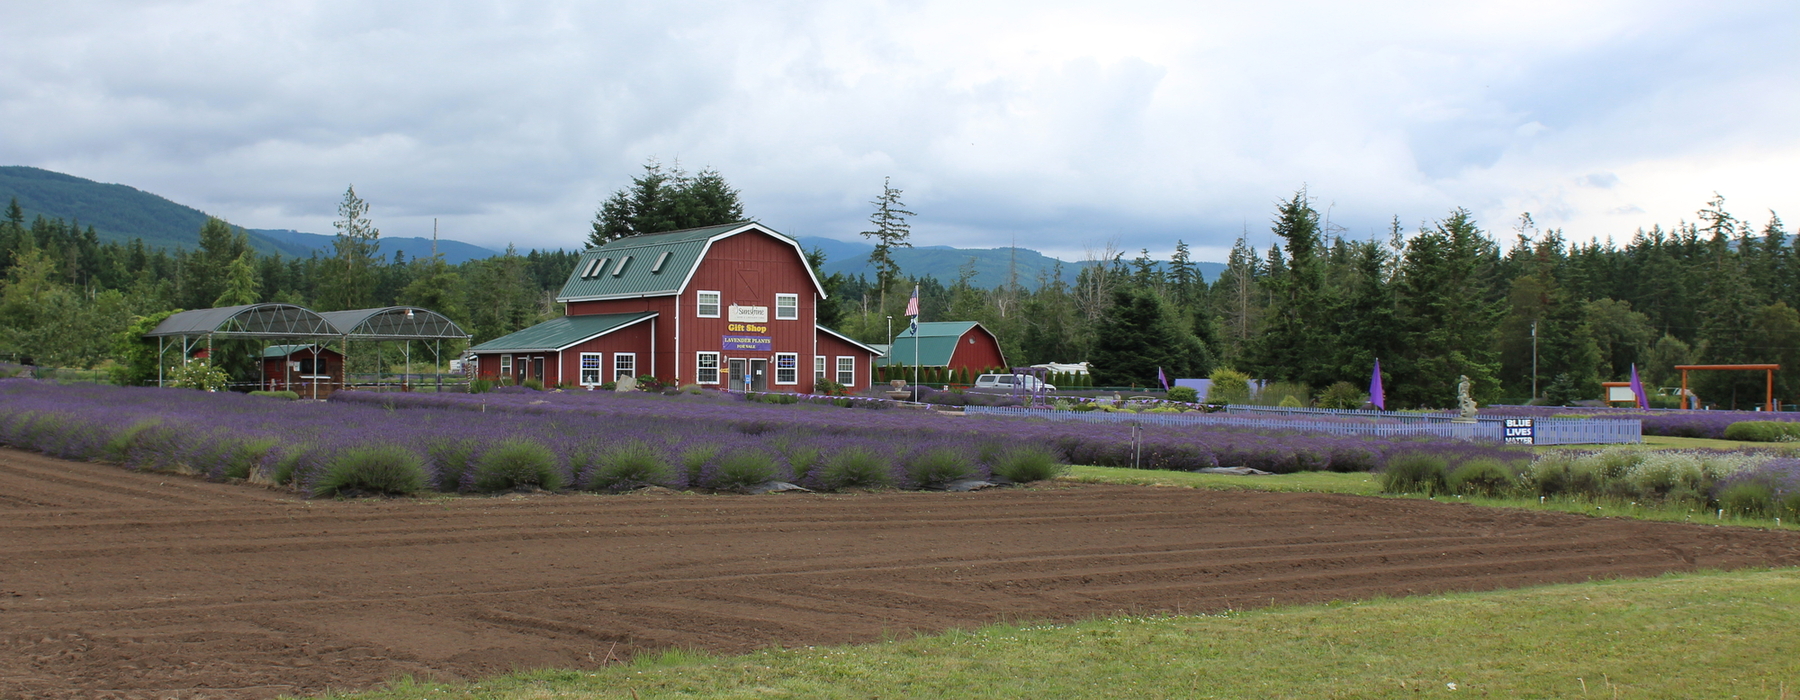 Lavender agritourism business